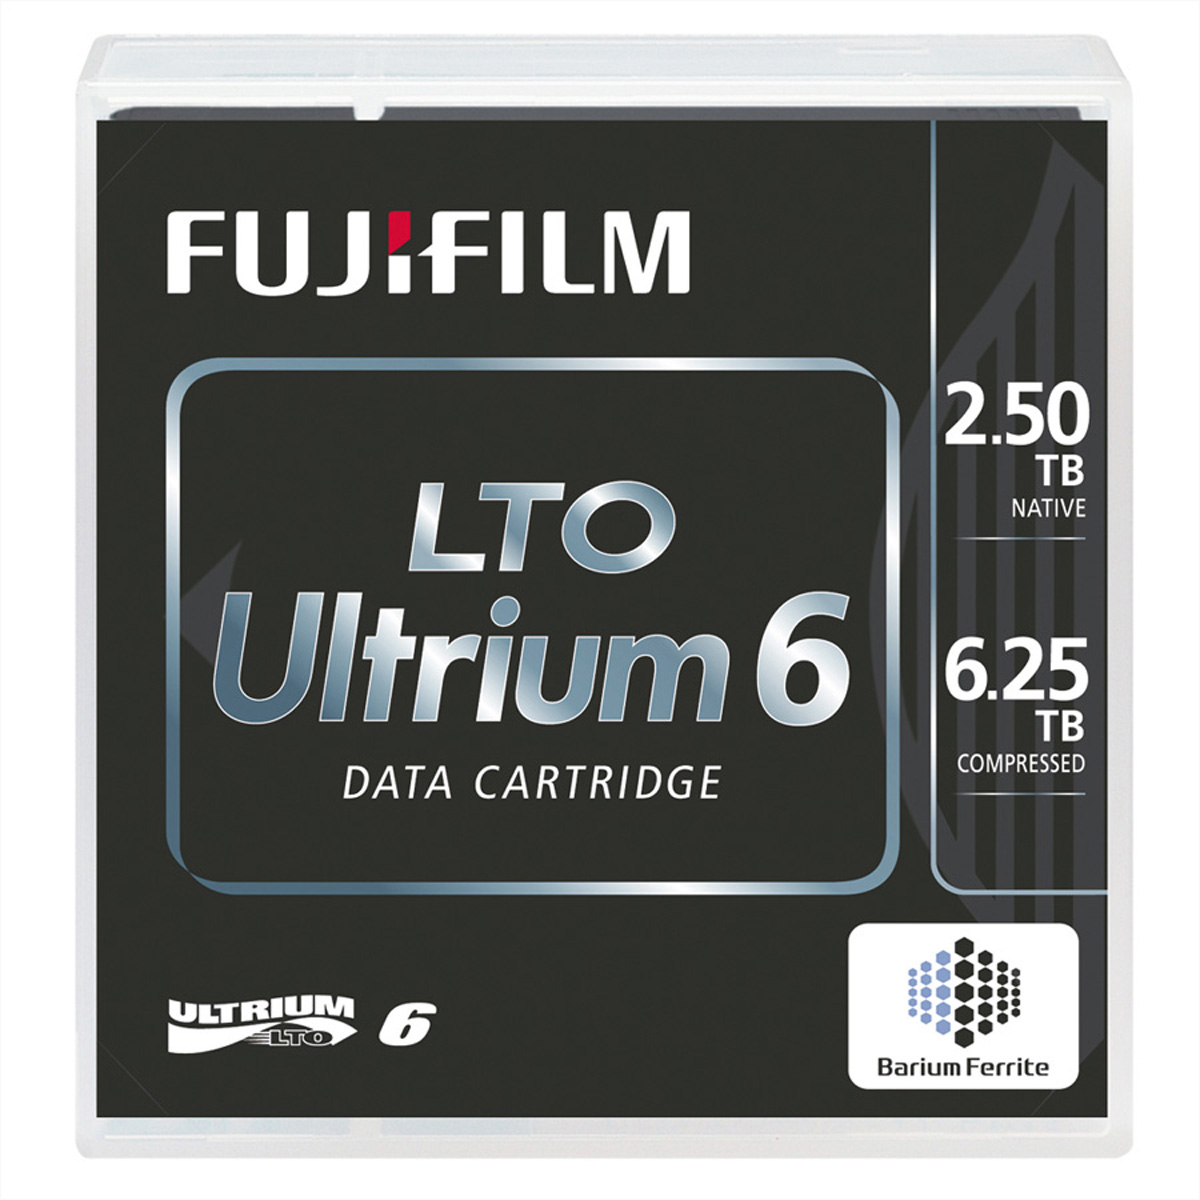 FUJI LTO Ultrium 6, 2500/6250GB